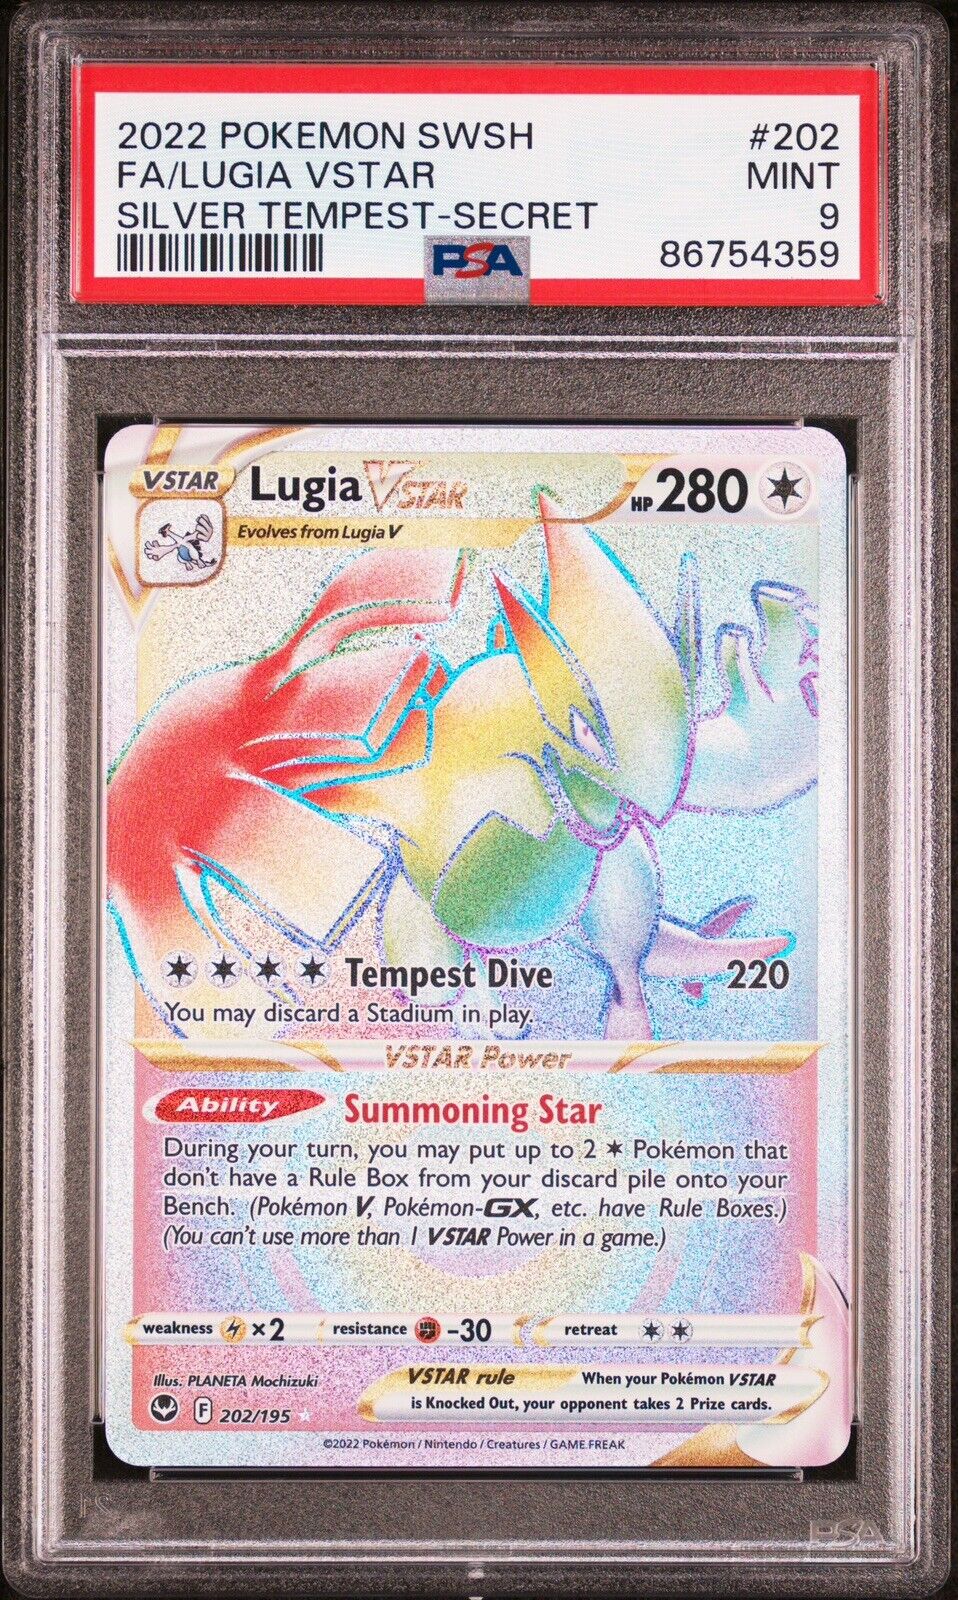 Pokémon TCG Lugia VStar 202/195 PSA 9 Silver Tempest Rare Rainbow Newly Graded